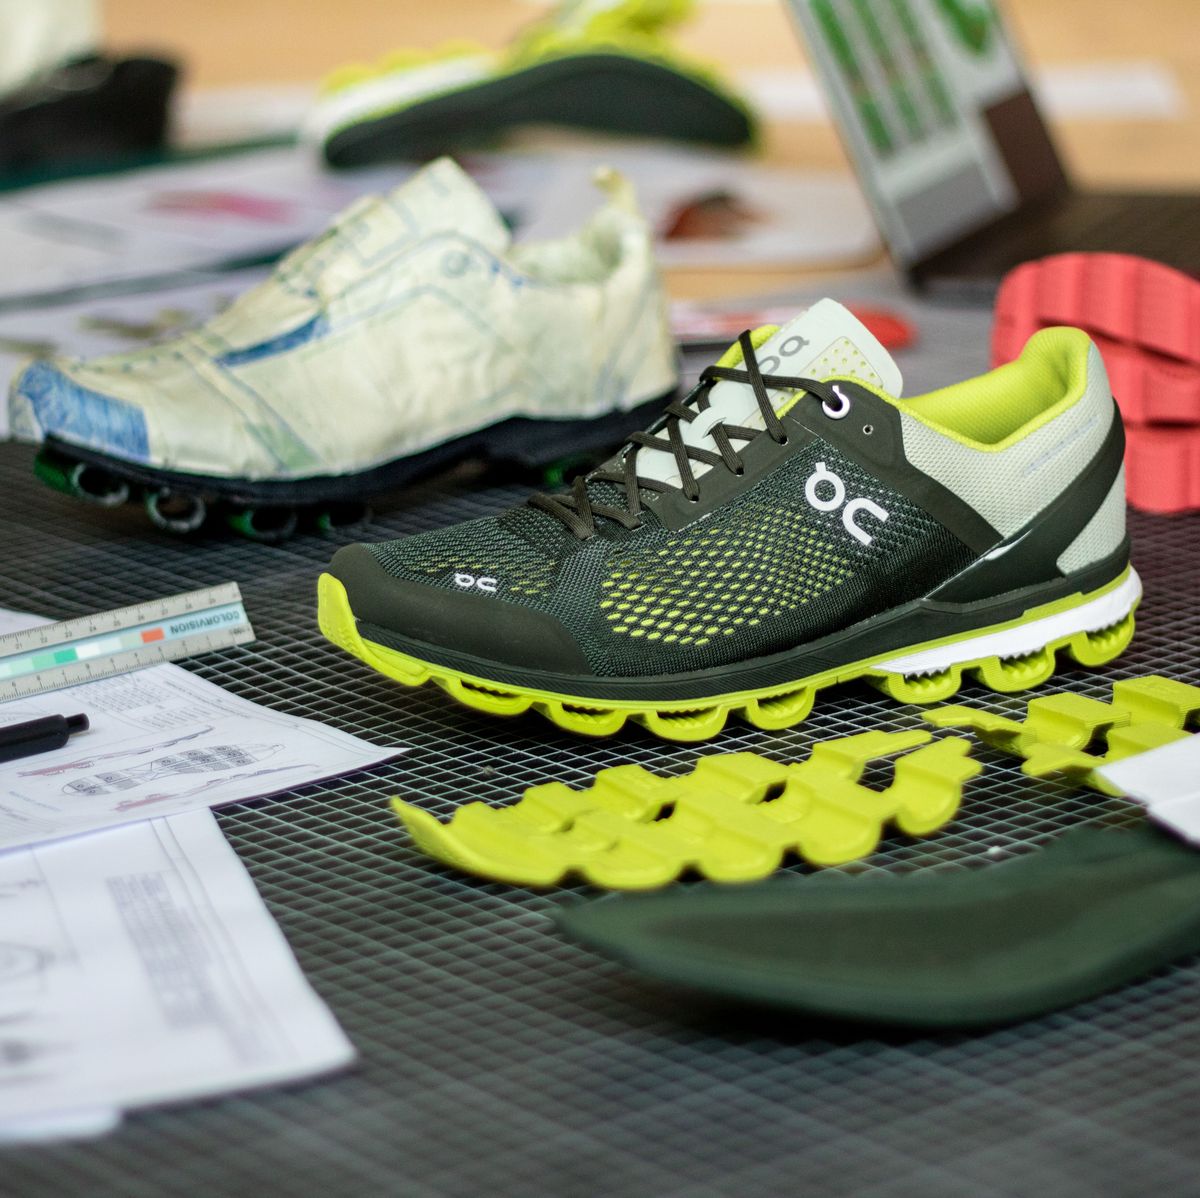 recibir Corta vida variable On Running: las zapatillas que han revolucionando el running